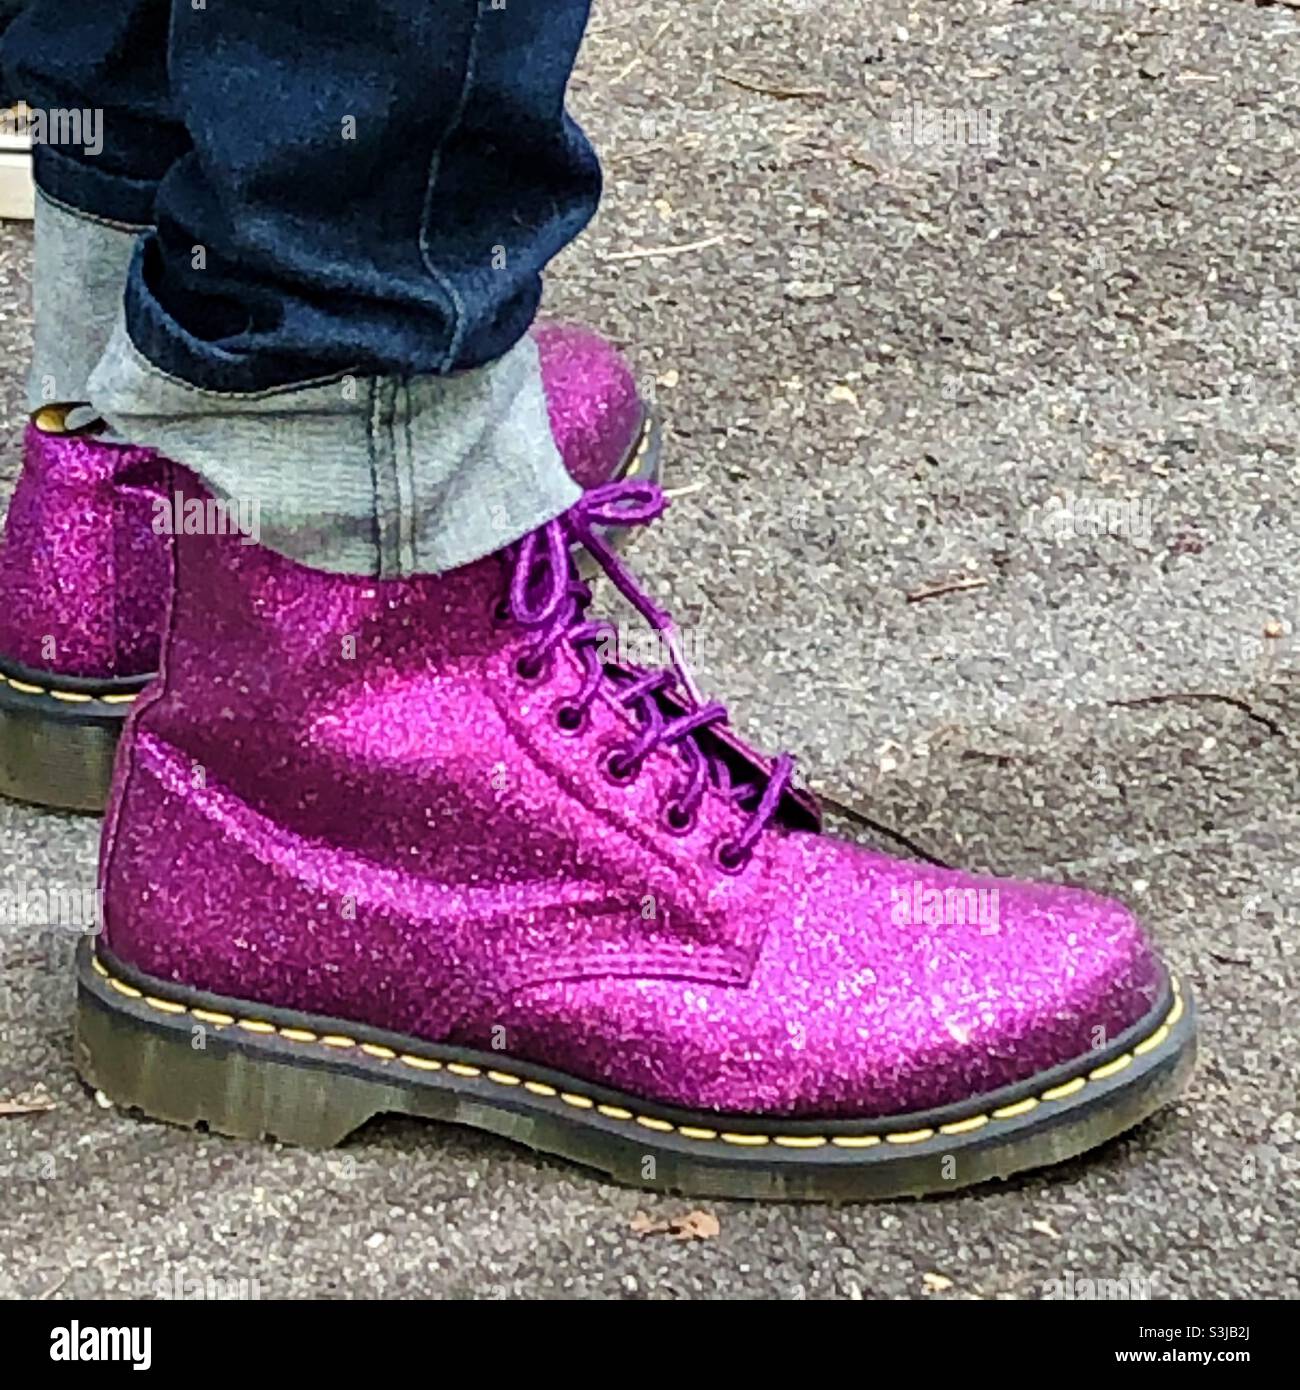 Purple Magenta Glitter Doc Martin boots worn by man Stock Photo - Alamy